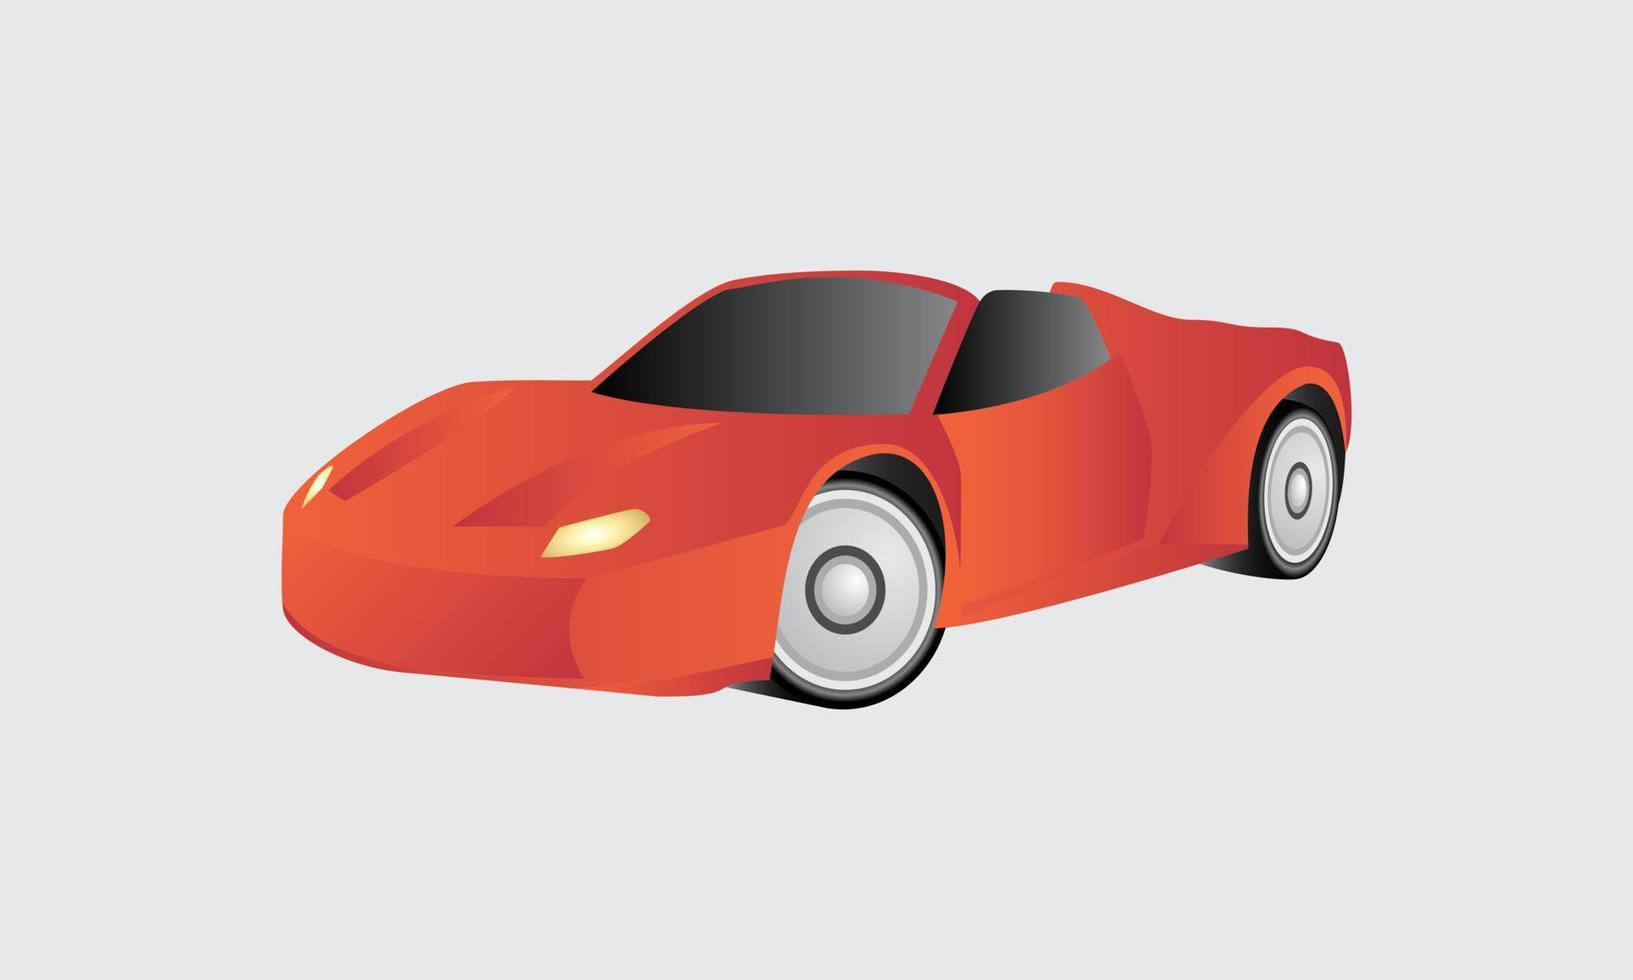 Vektorgrafik des Superautos mit roter Farbe. Vektor-Illustration vektor